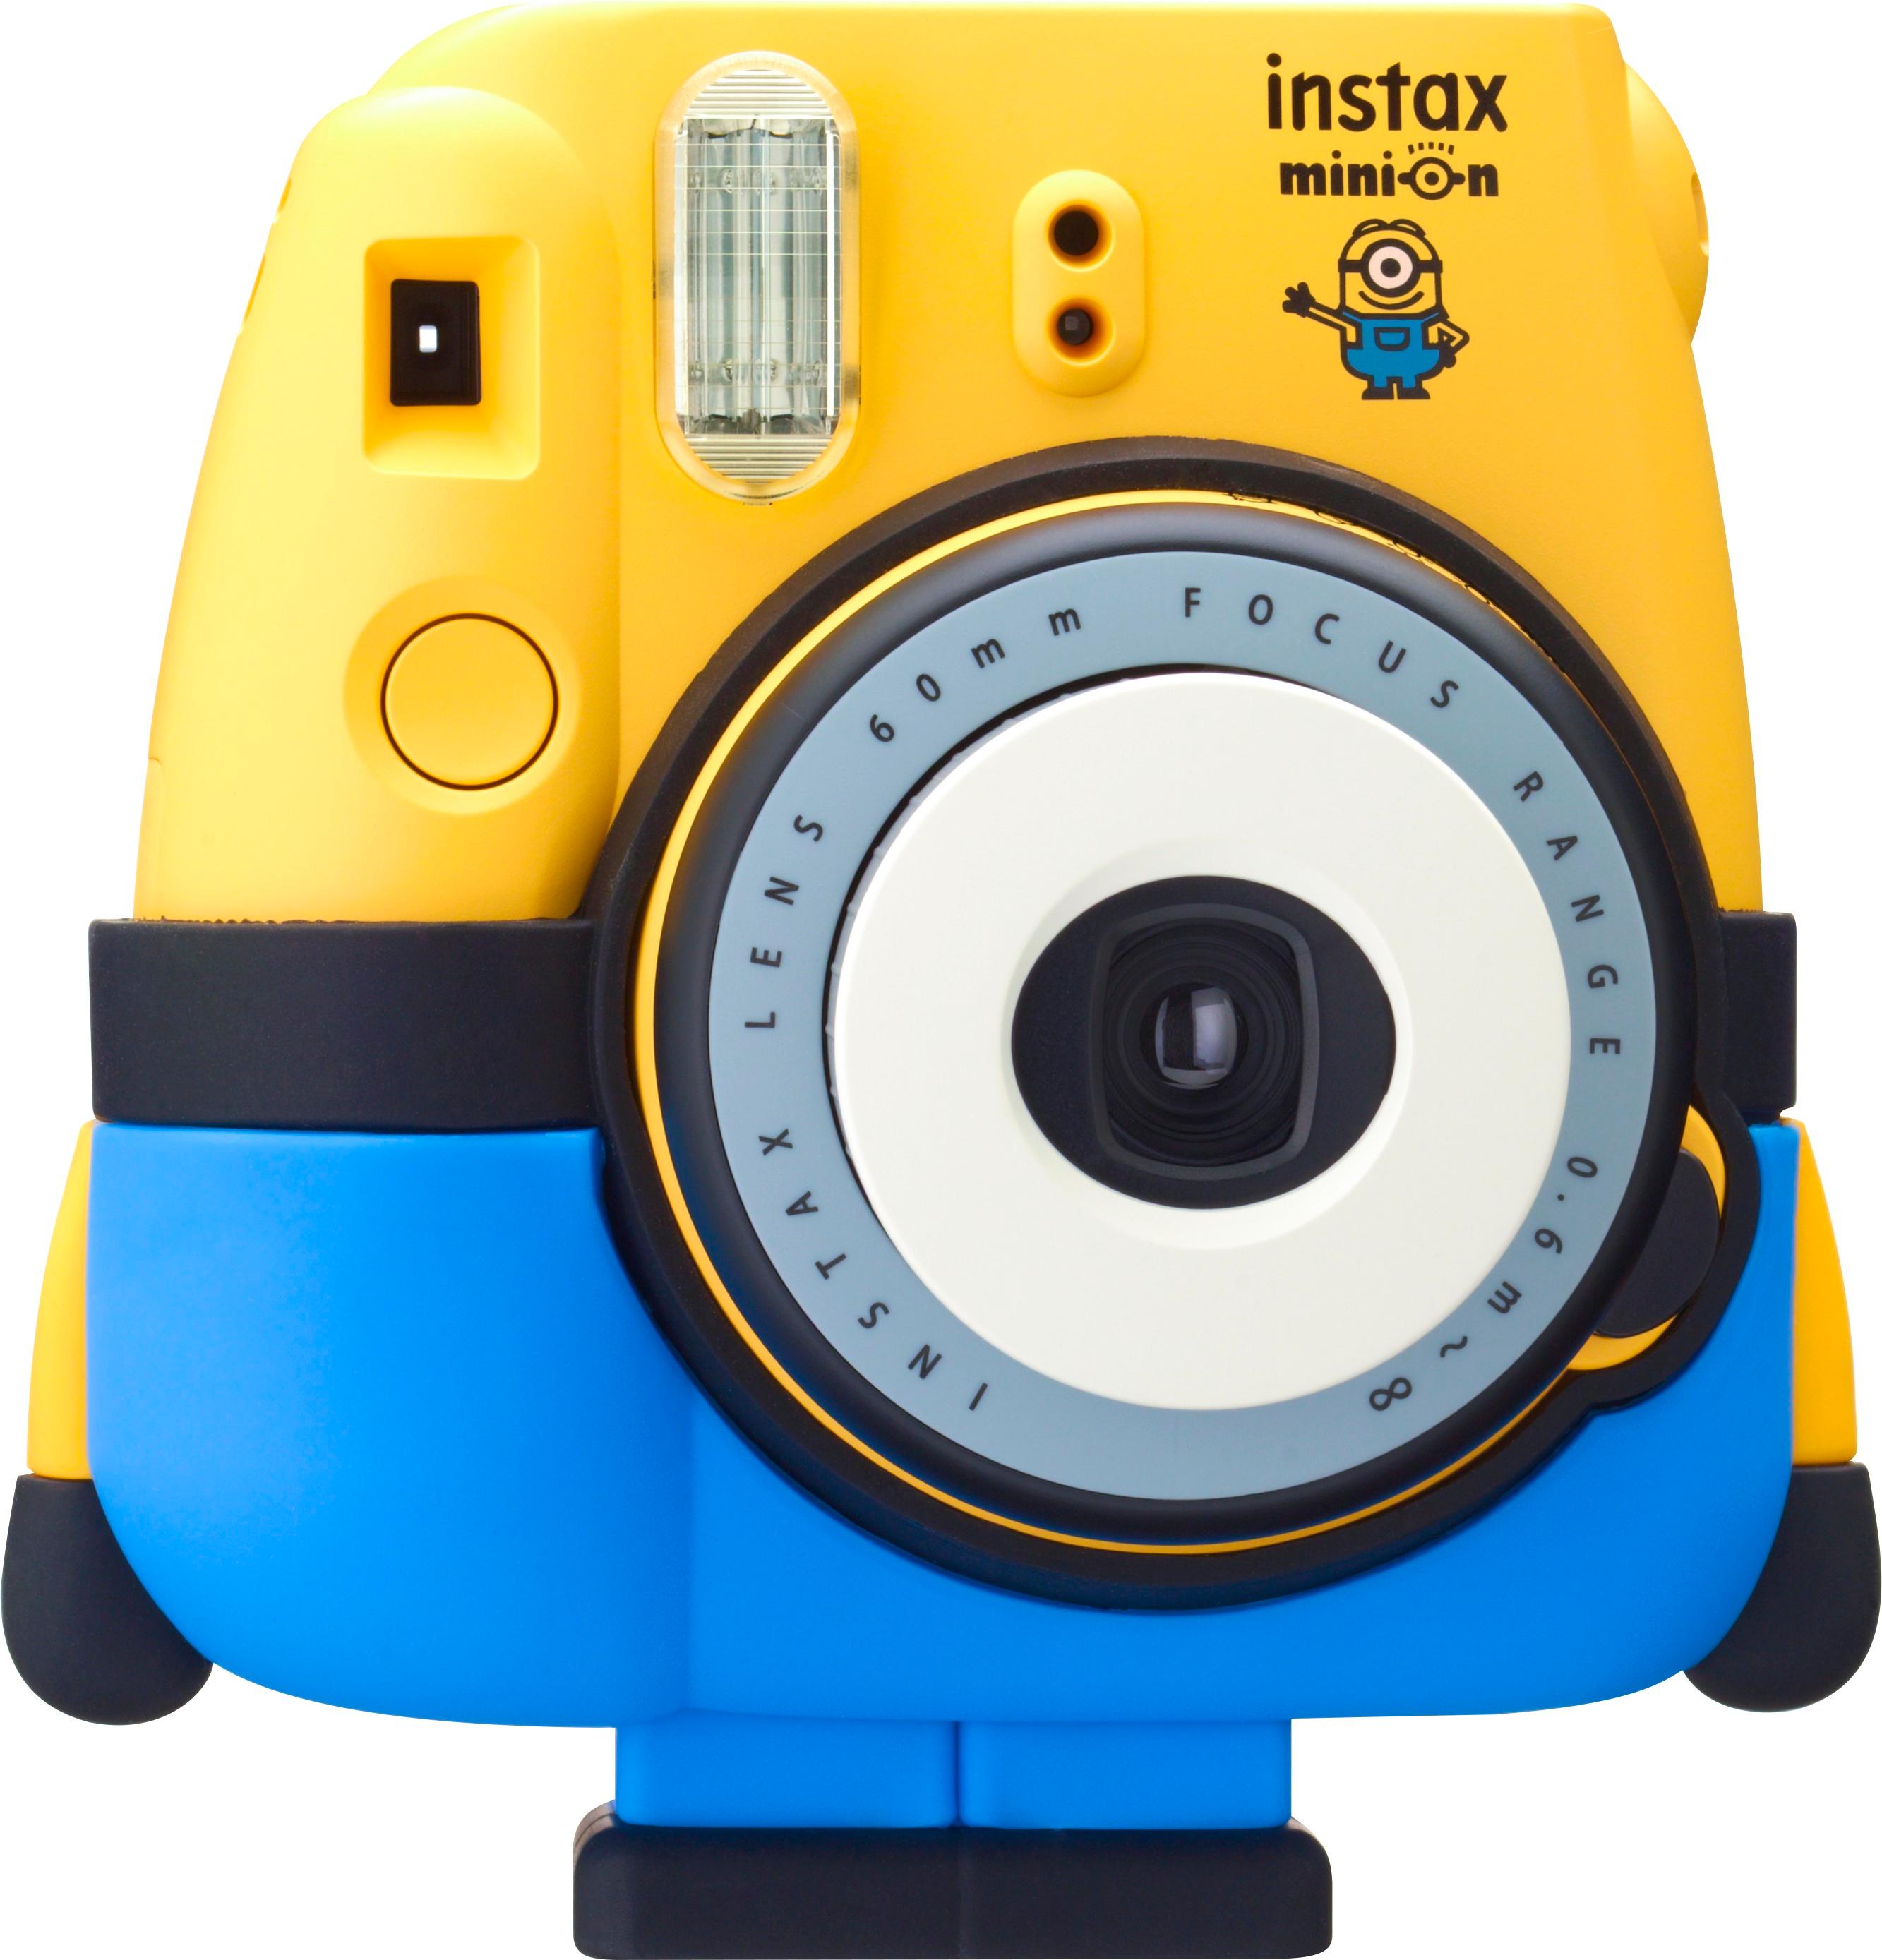 oficina postal Finito Dardos Fujifilm Minion instax mini 8 Instant Film Camera 16556348 - Best Buy